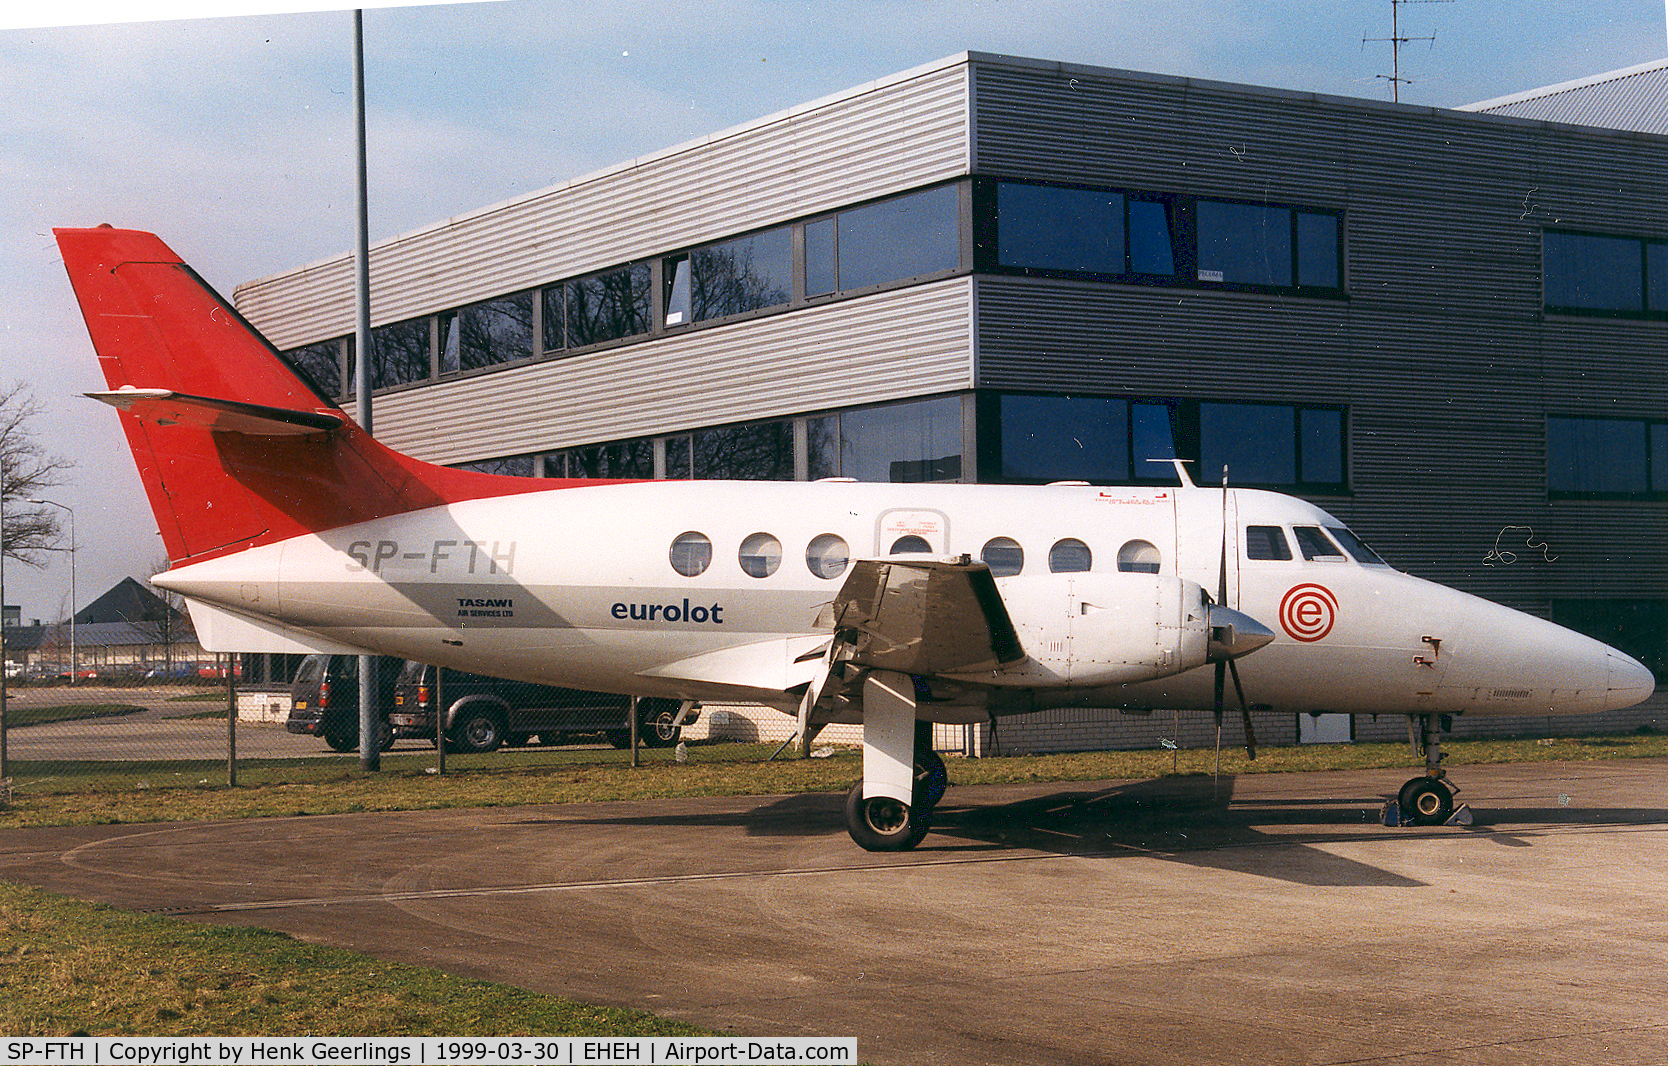 SP-FTH, 1984 British Aerospace BAe-3108 Jetstream 31 C/N 649, Eurolot - Tasawi Air Services ; ex PH-KJC of Netherlines